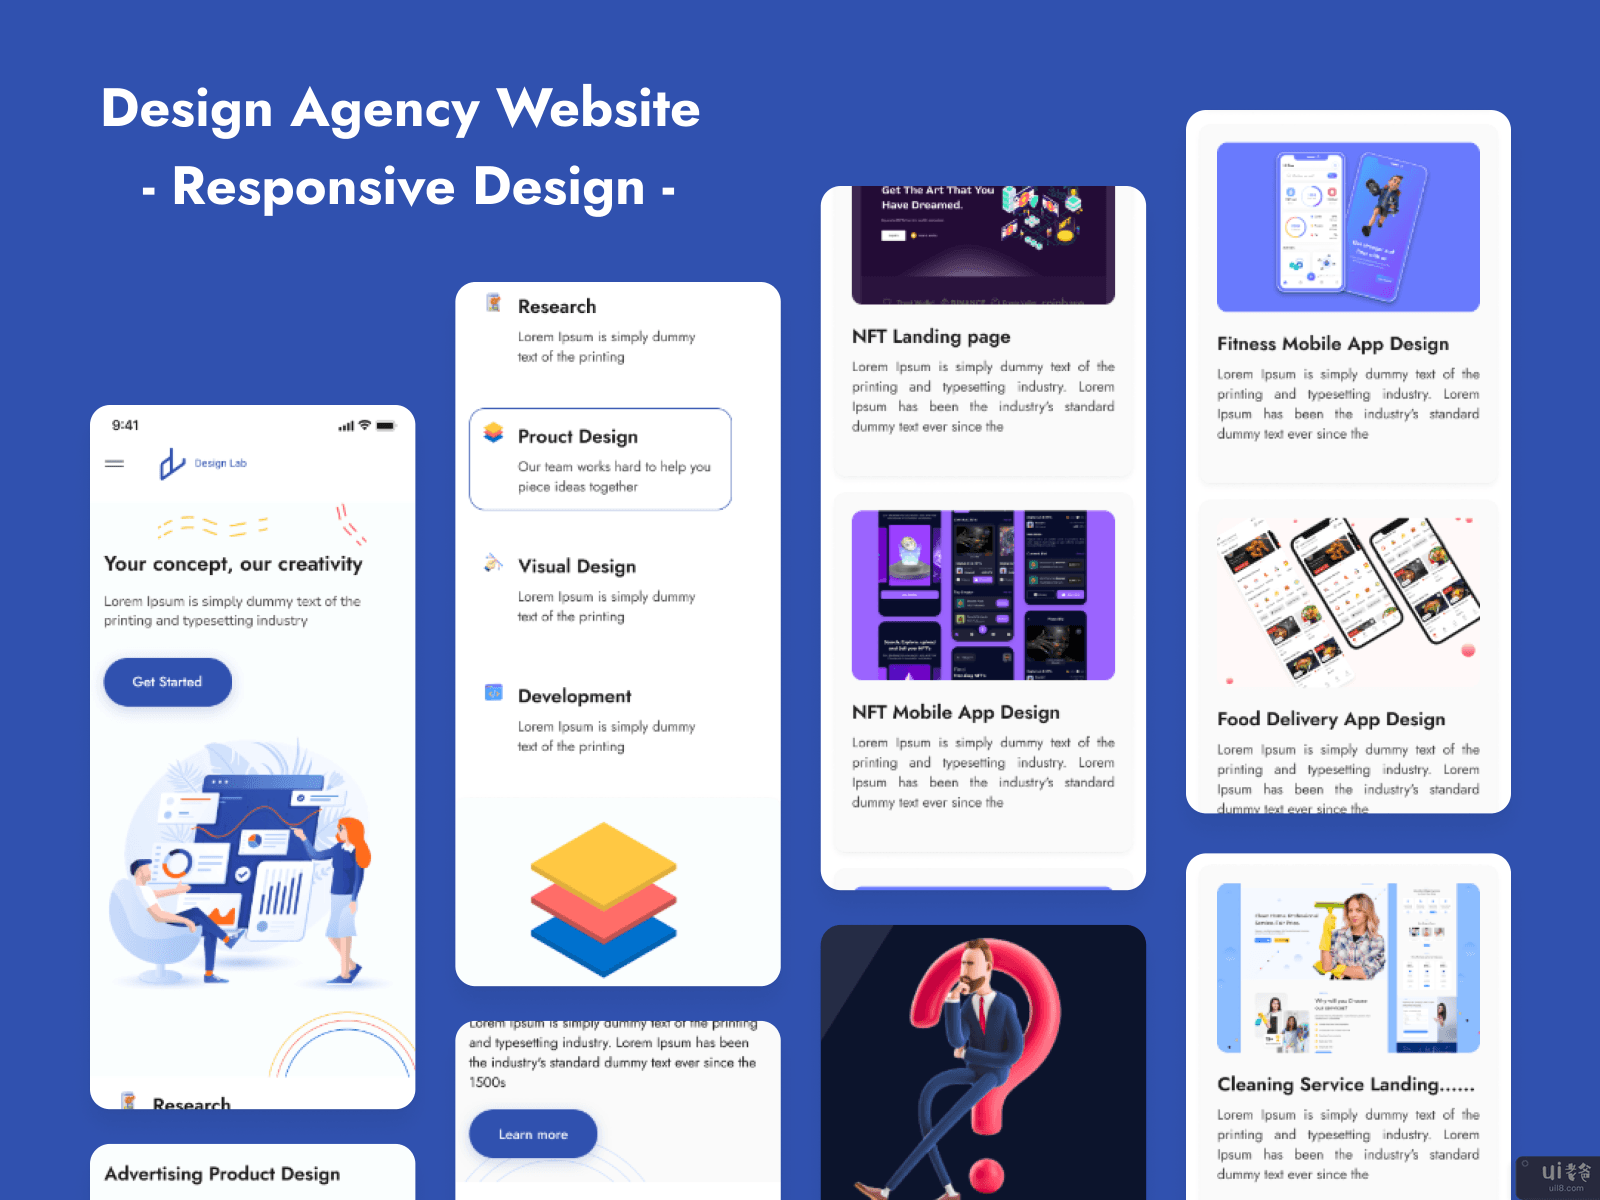 设计机构网站 - 响应式设计 -(Design Agency Website - Responsive Design -)插图